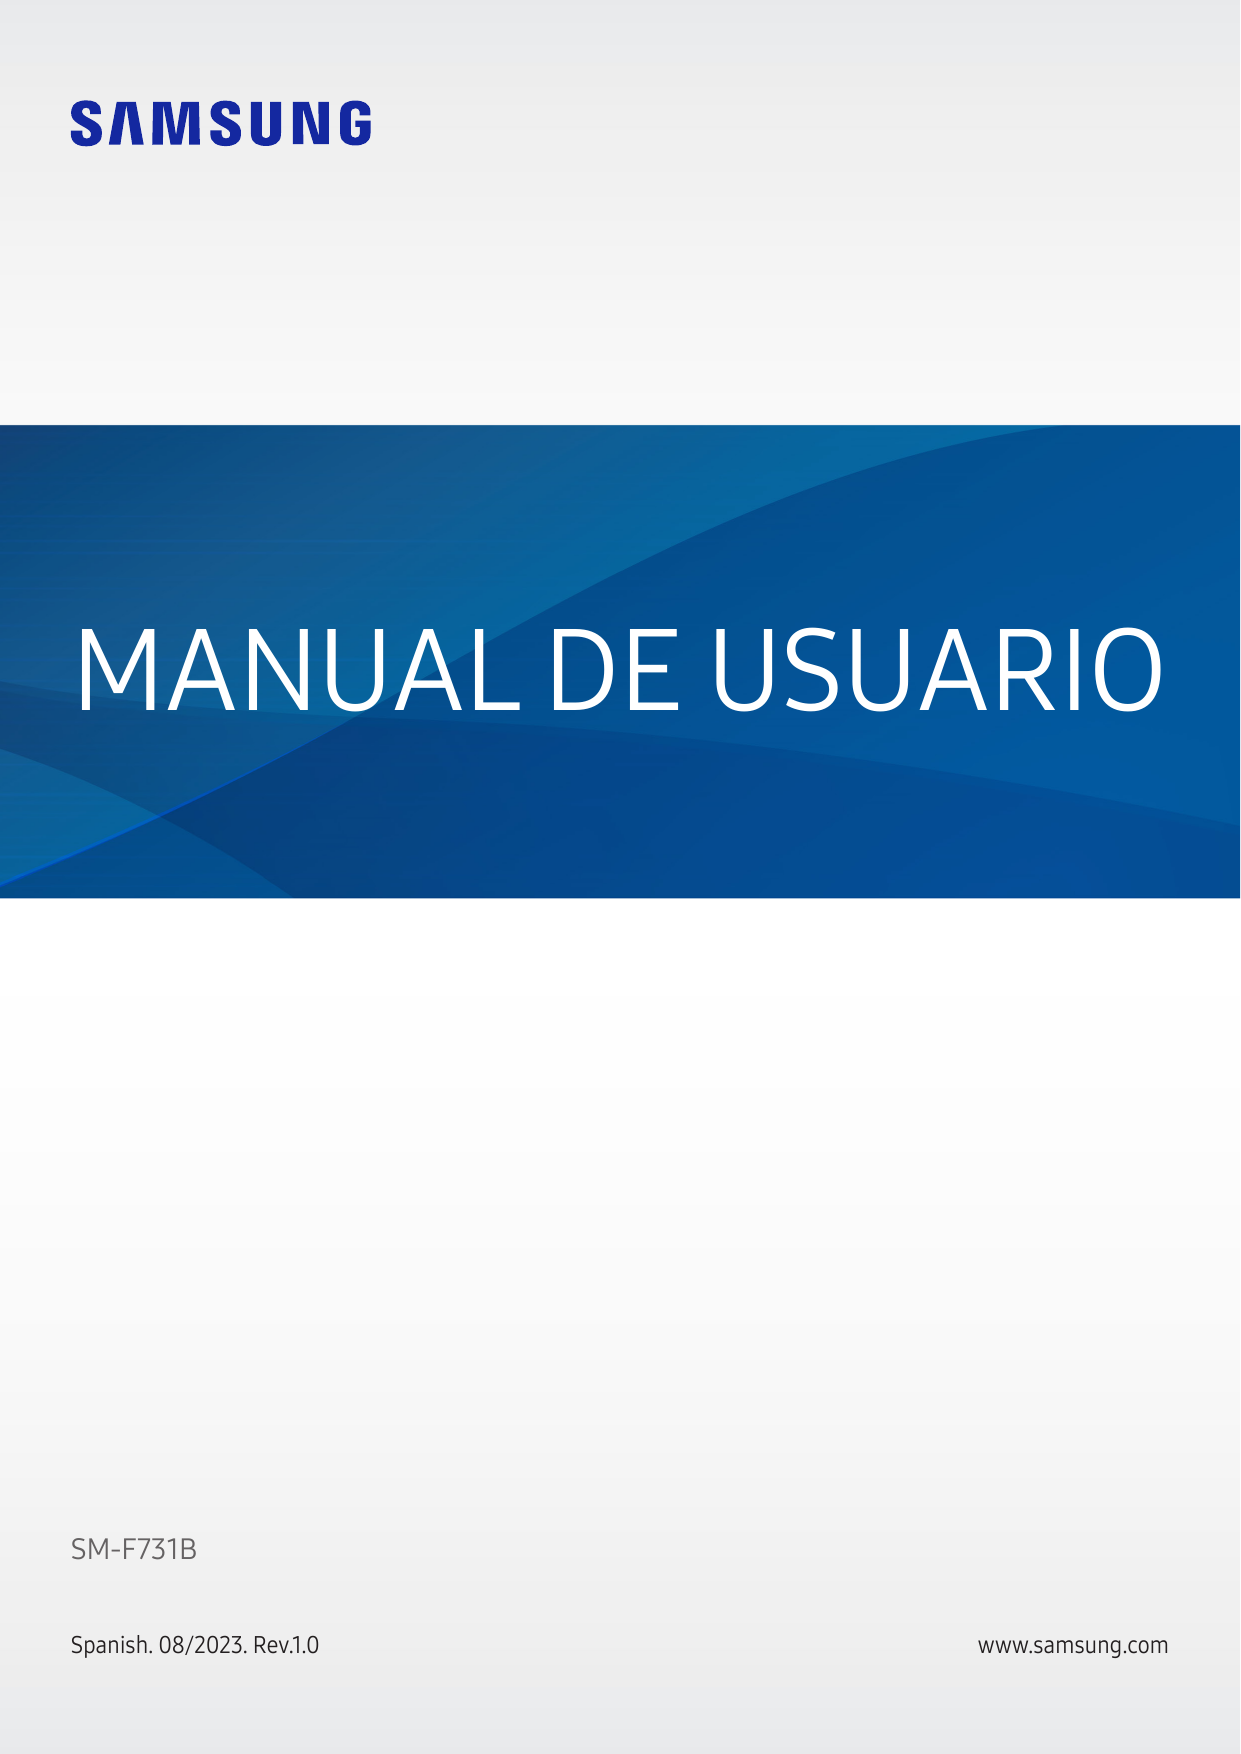 MANUAL DE USUARIOSM-F731BSpanish. 08/2023. Rev.1.0www.samsung.com